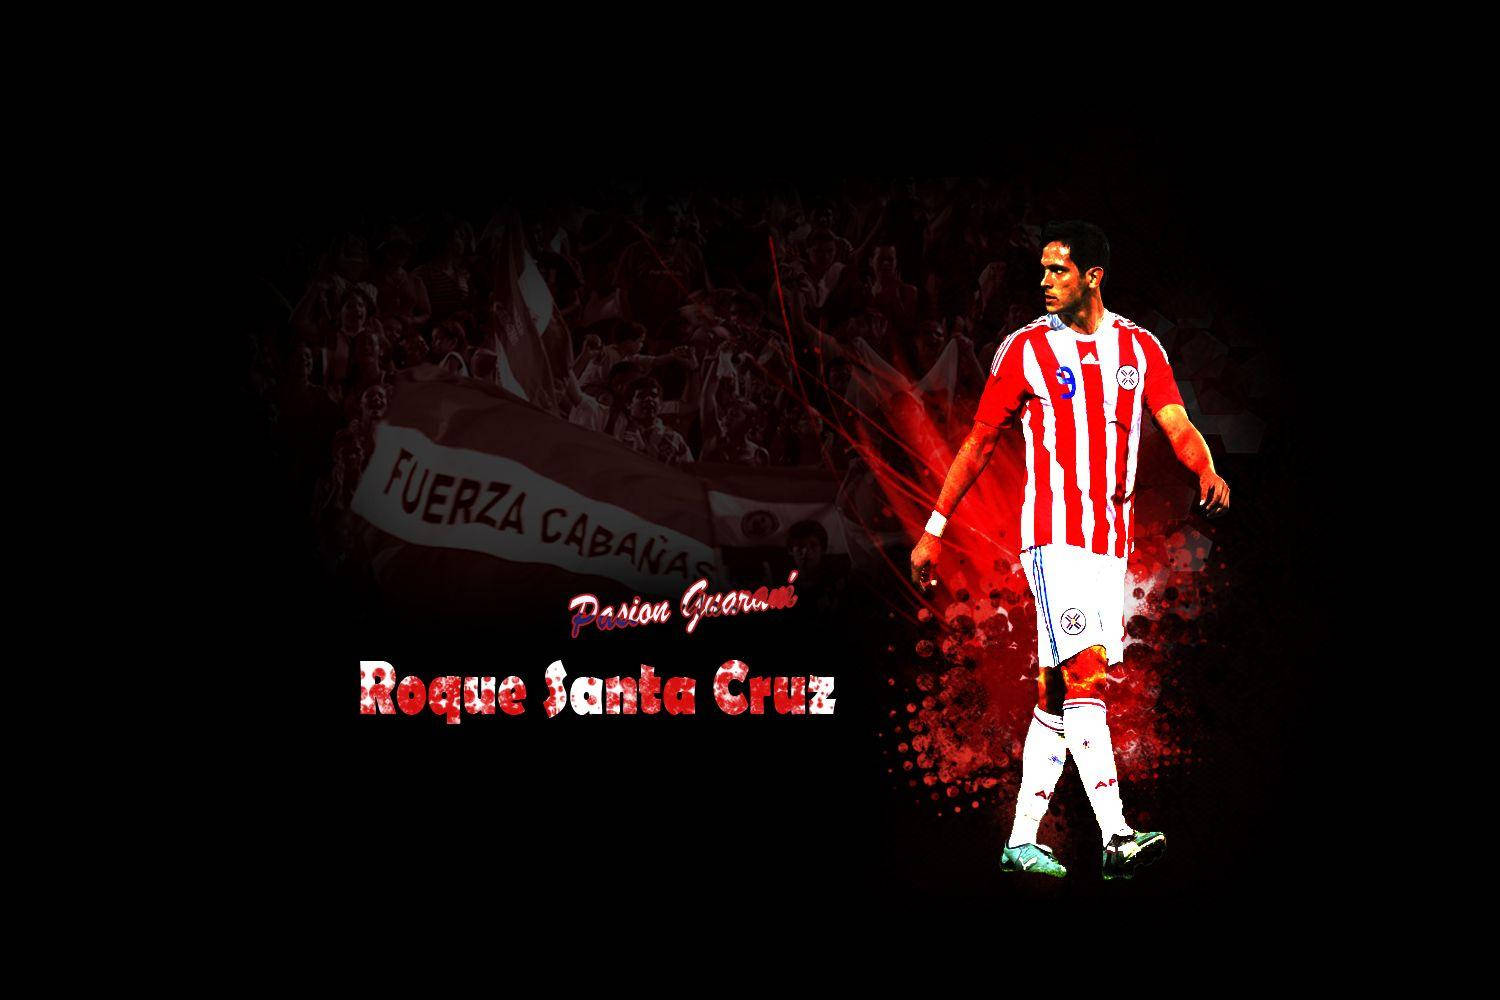 Paraguayischerfußballspieler Roque Wallpaper